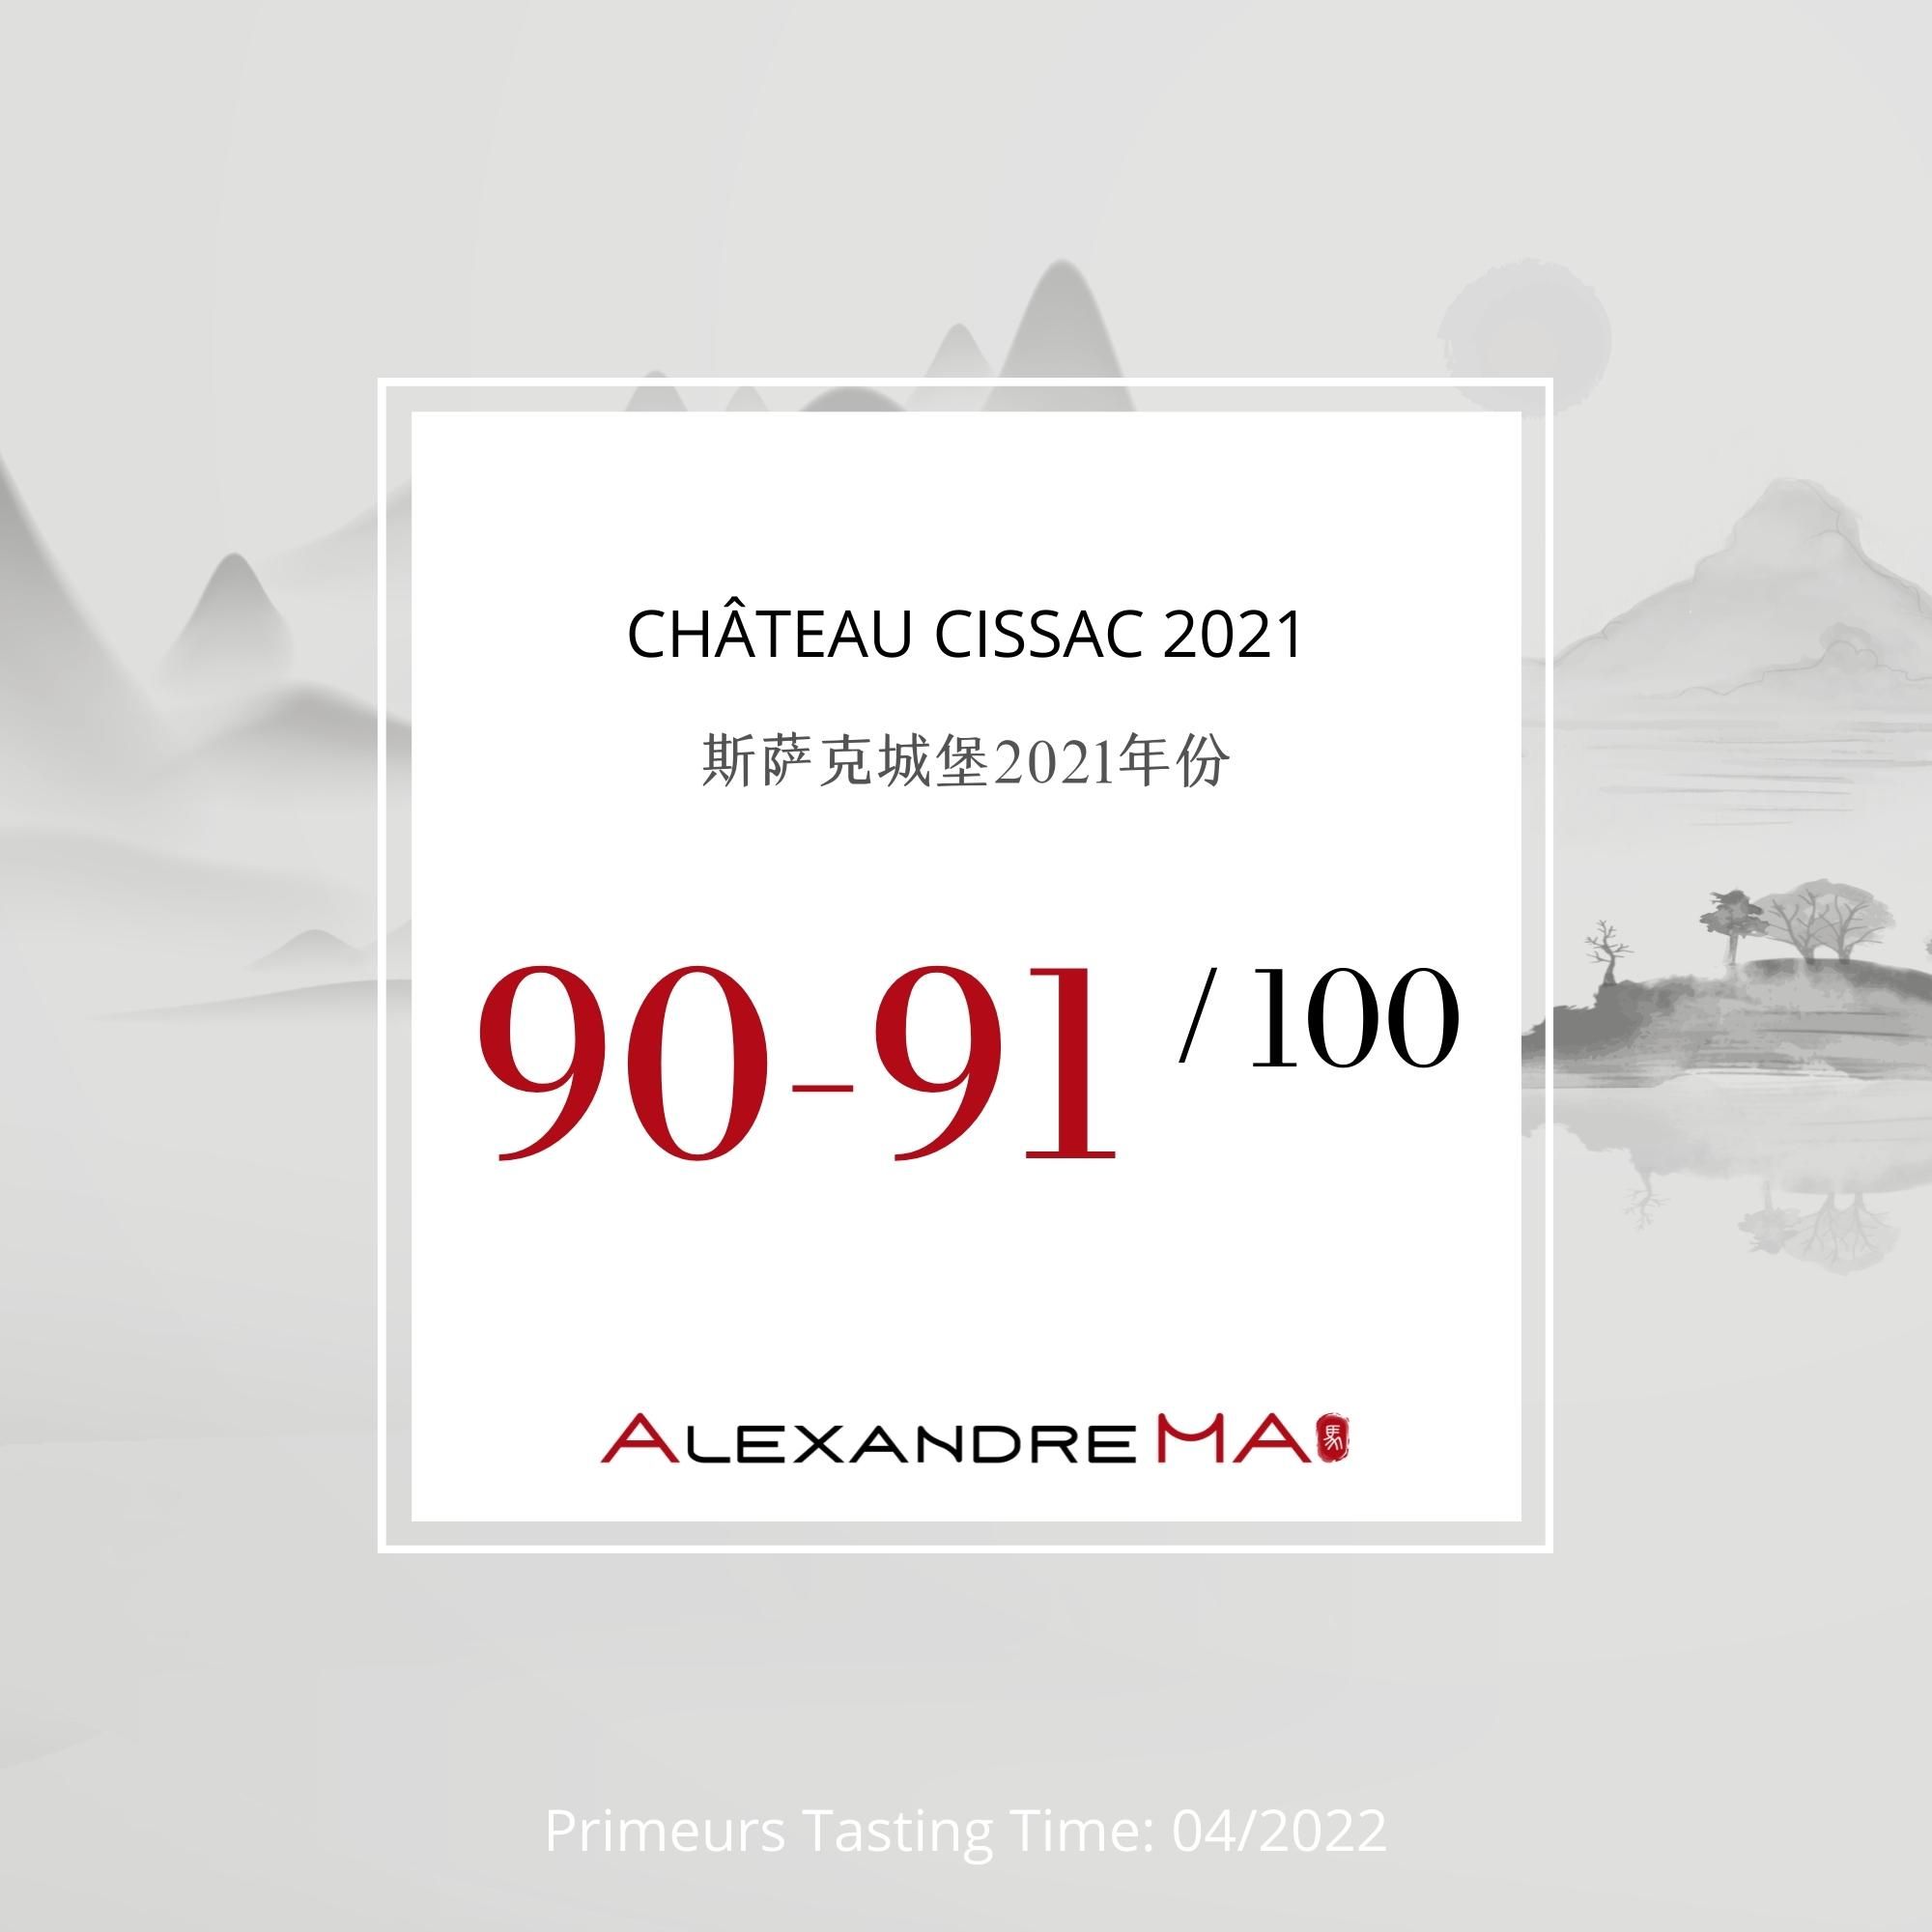 Château Cissac 2021 - Alexandre MA